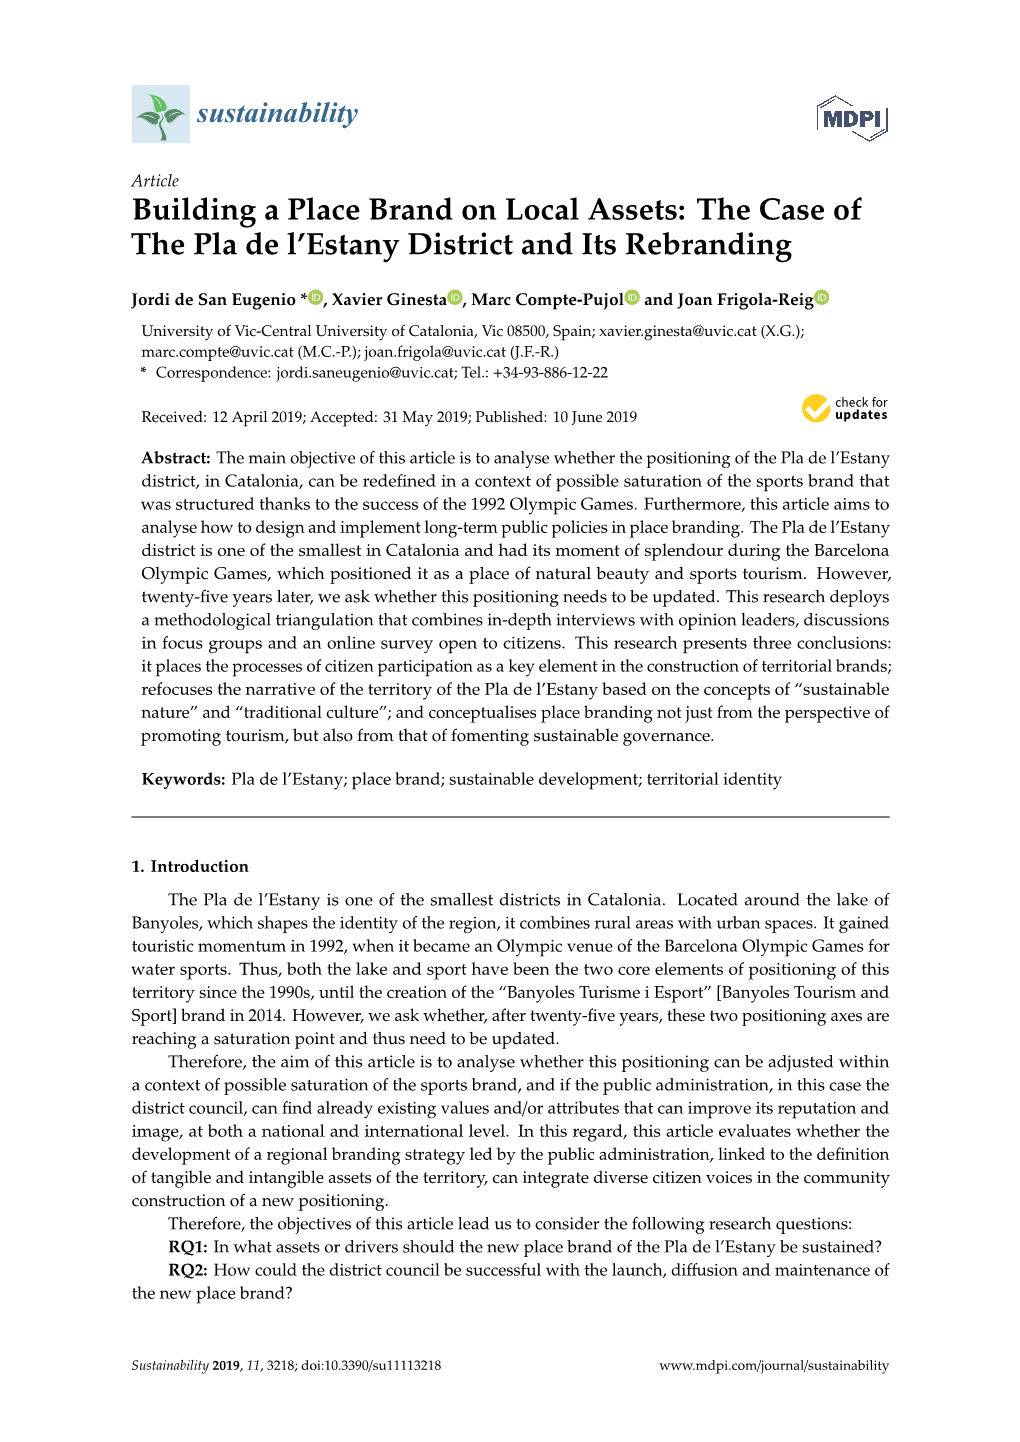 The Case of the Pla De L'estany District and Its Rebranding